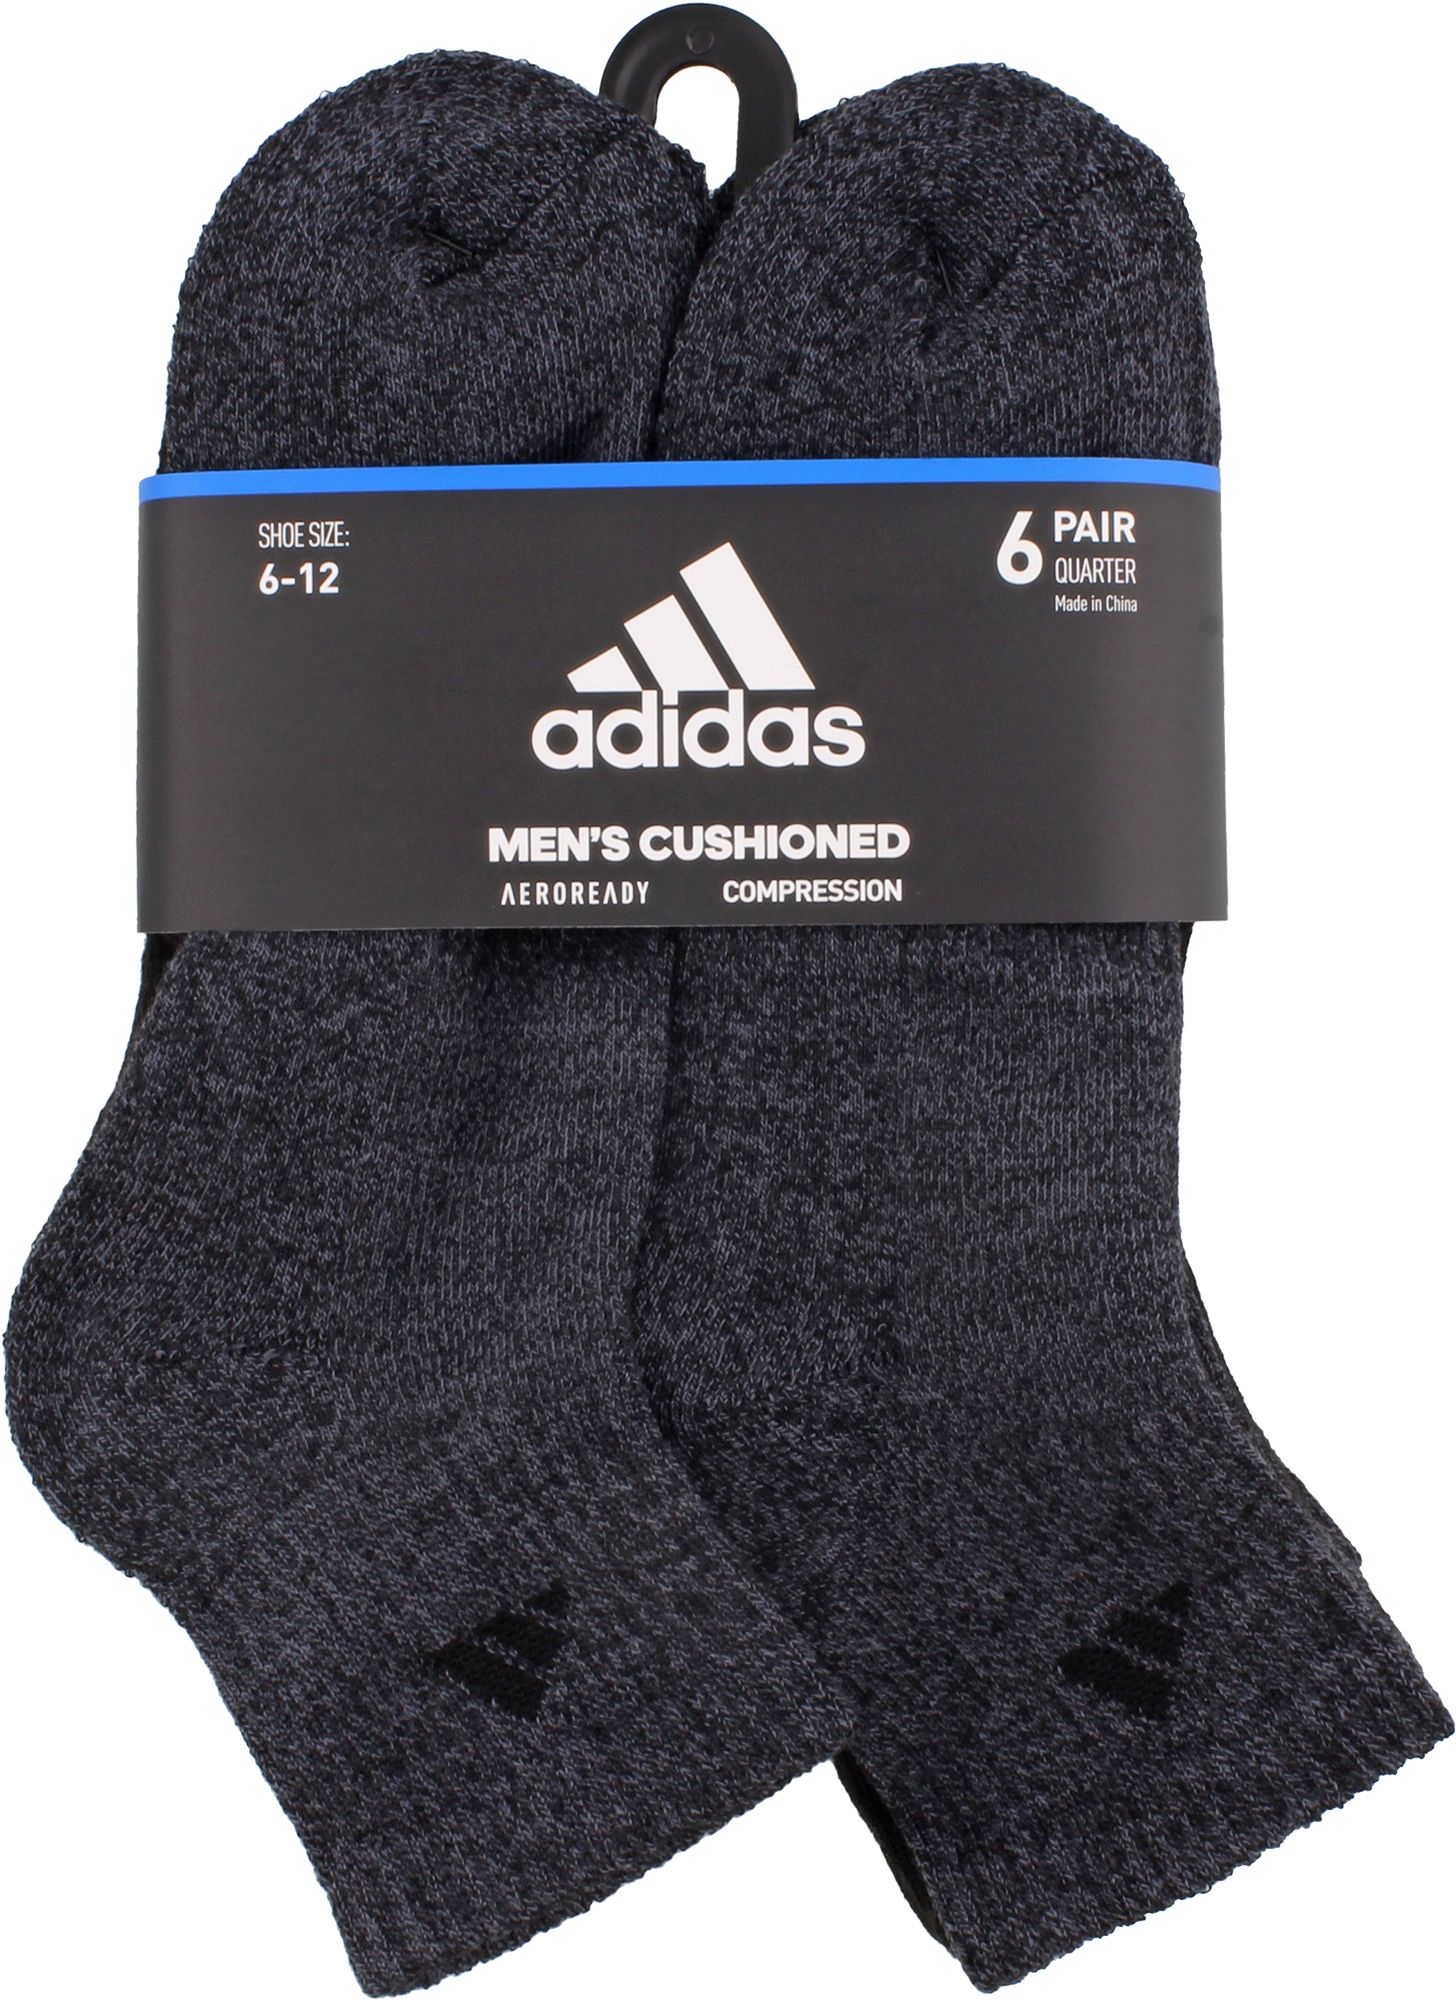 adidas climacool quarter socks 6 pack